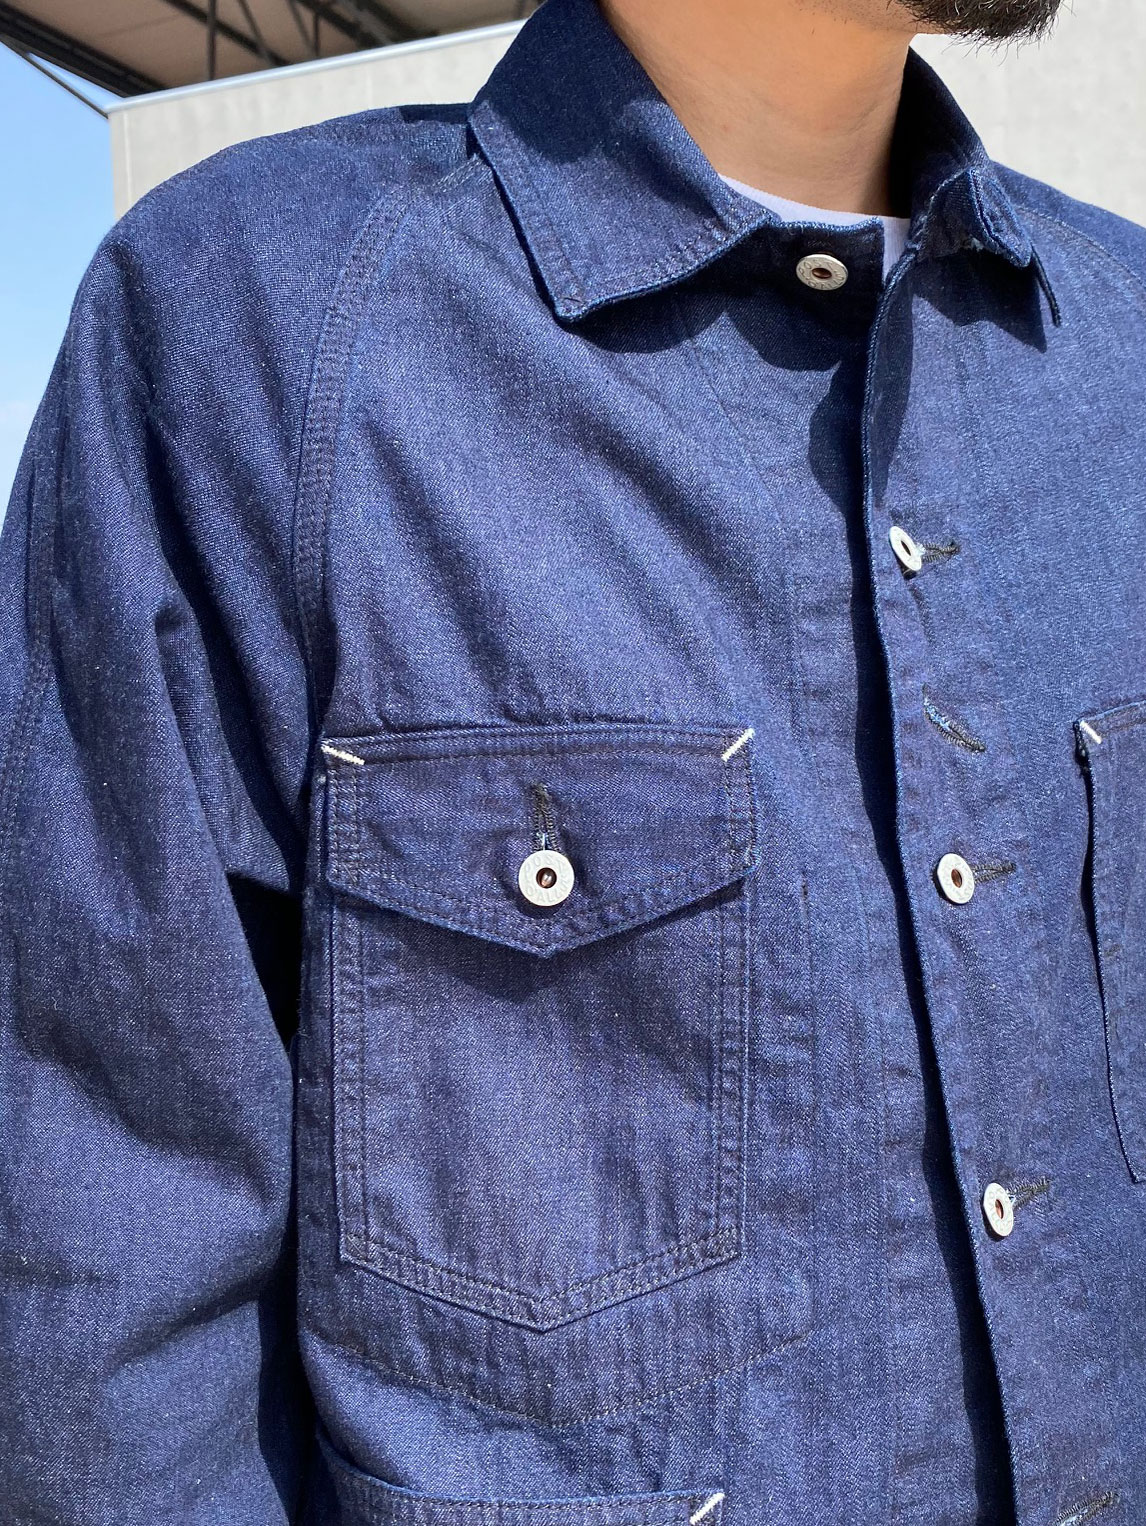 POST O'ALLS】Engineers' Jacket & ARMY Shirt 明日発売 